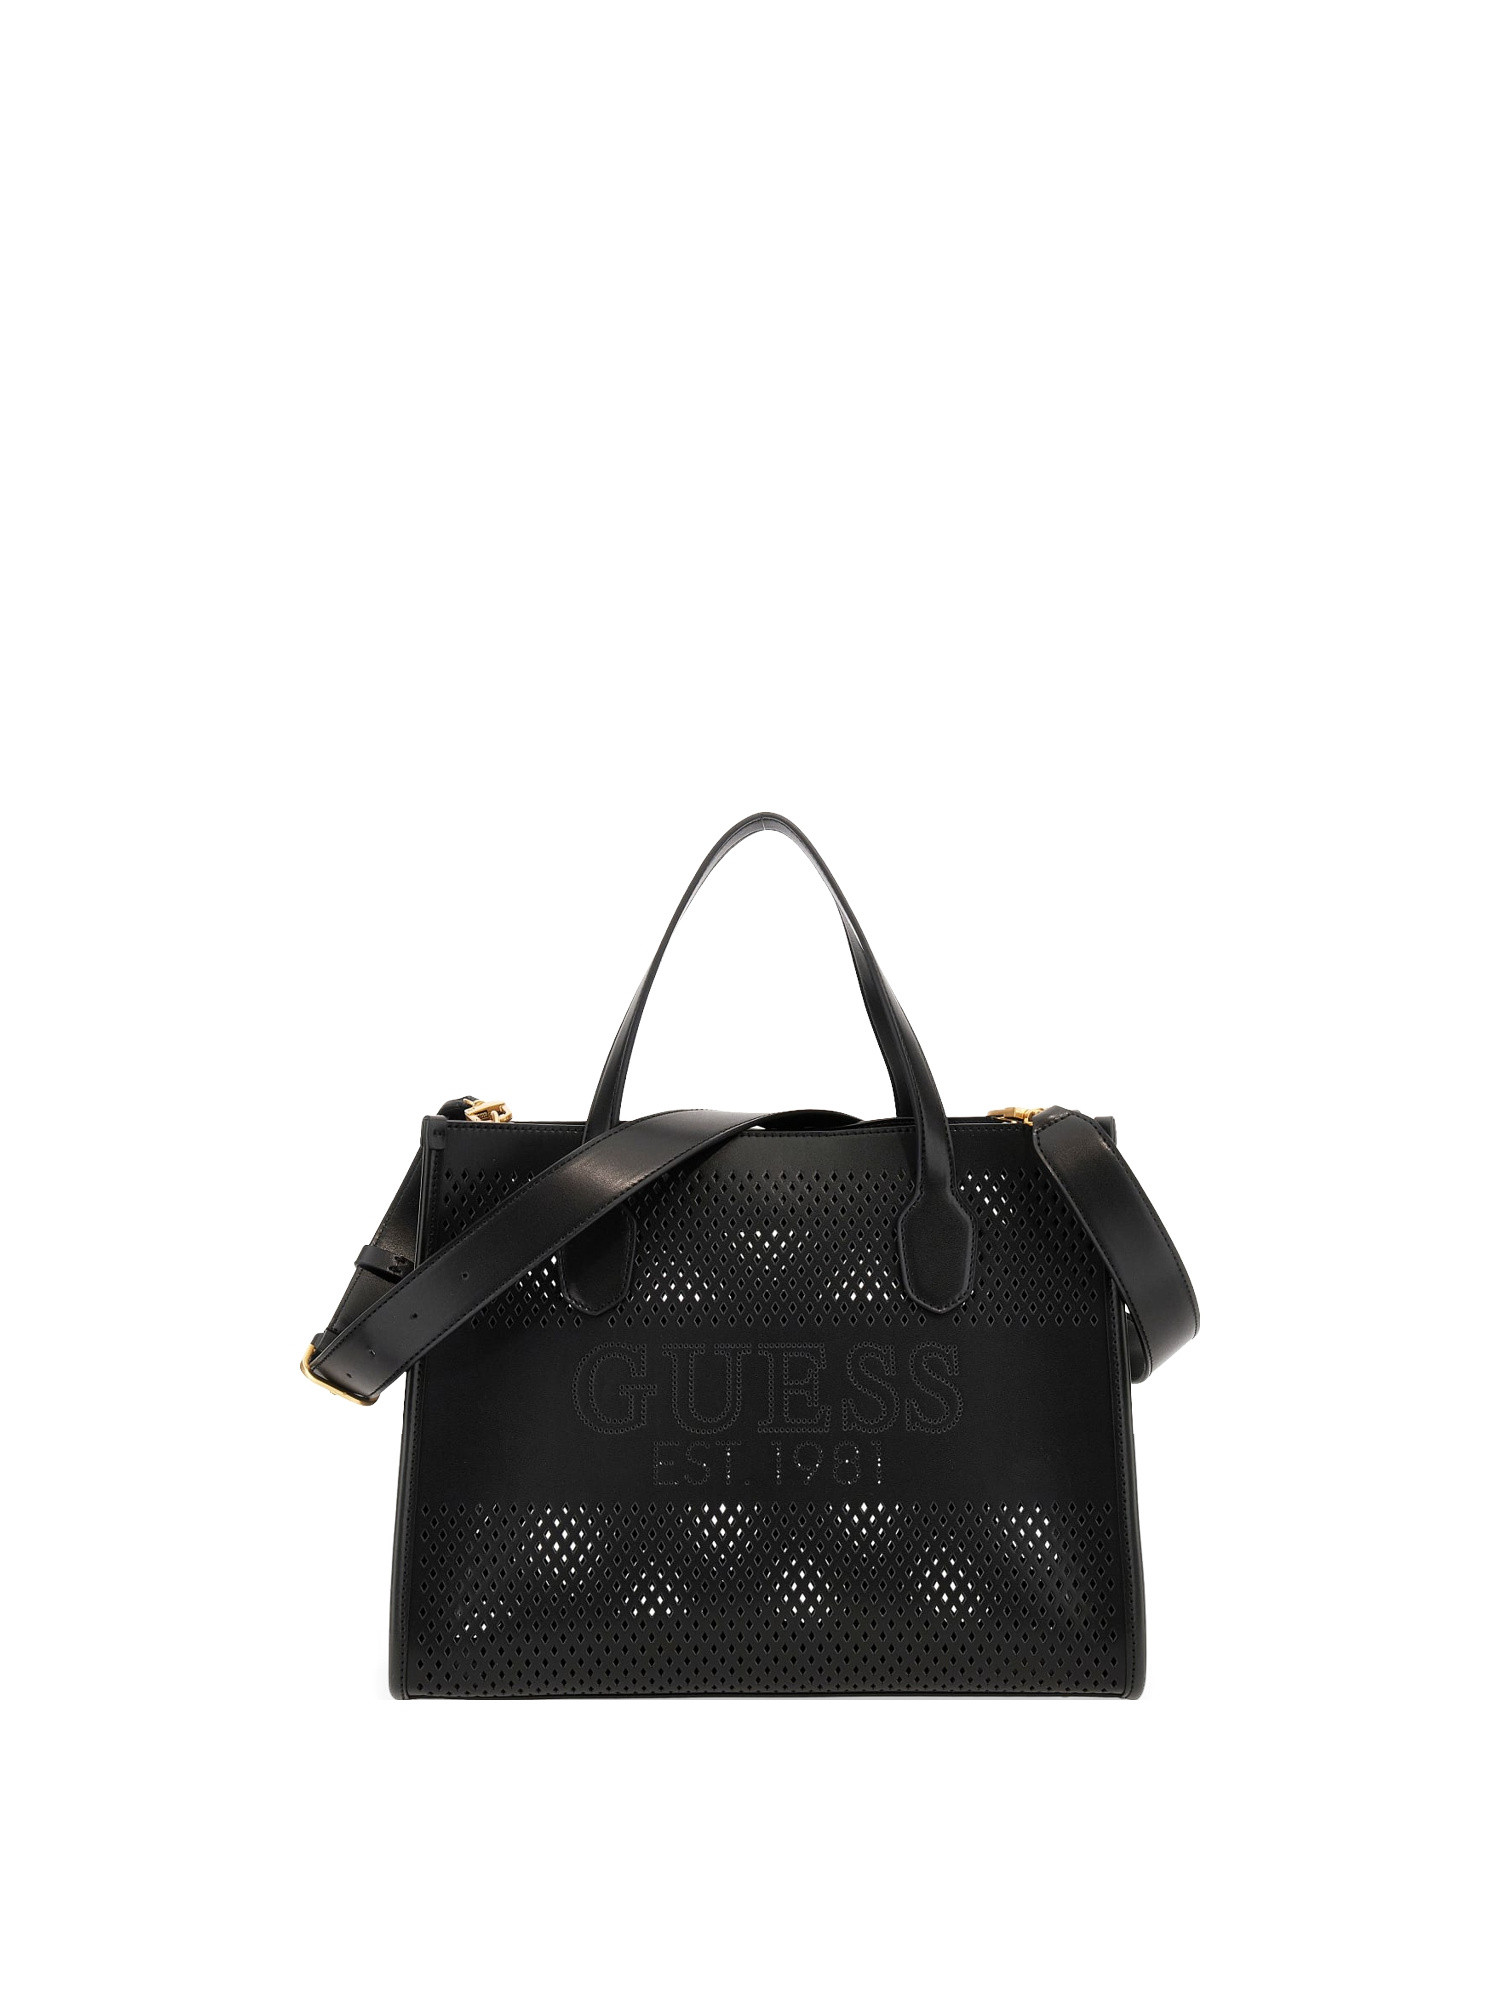 Guess - Katey perforated handbag, Black, large image number 0